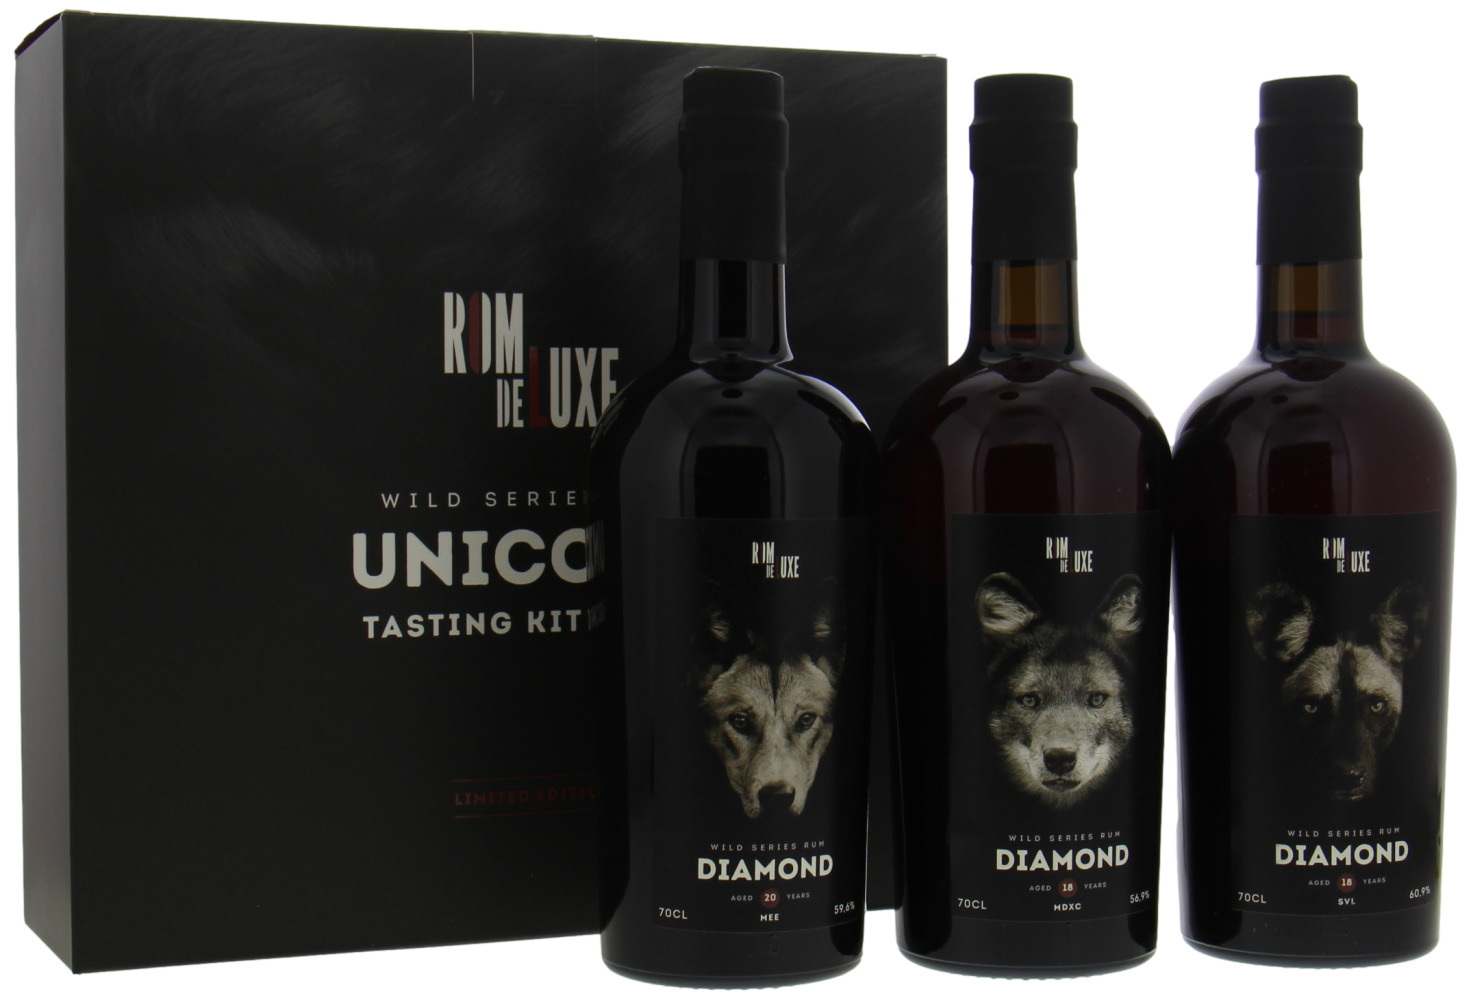 RomDeLuxe - Wild Series Unicorn Tasting Kit Edition 2 NV In Original Box